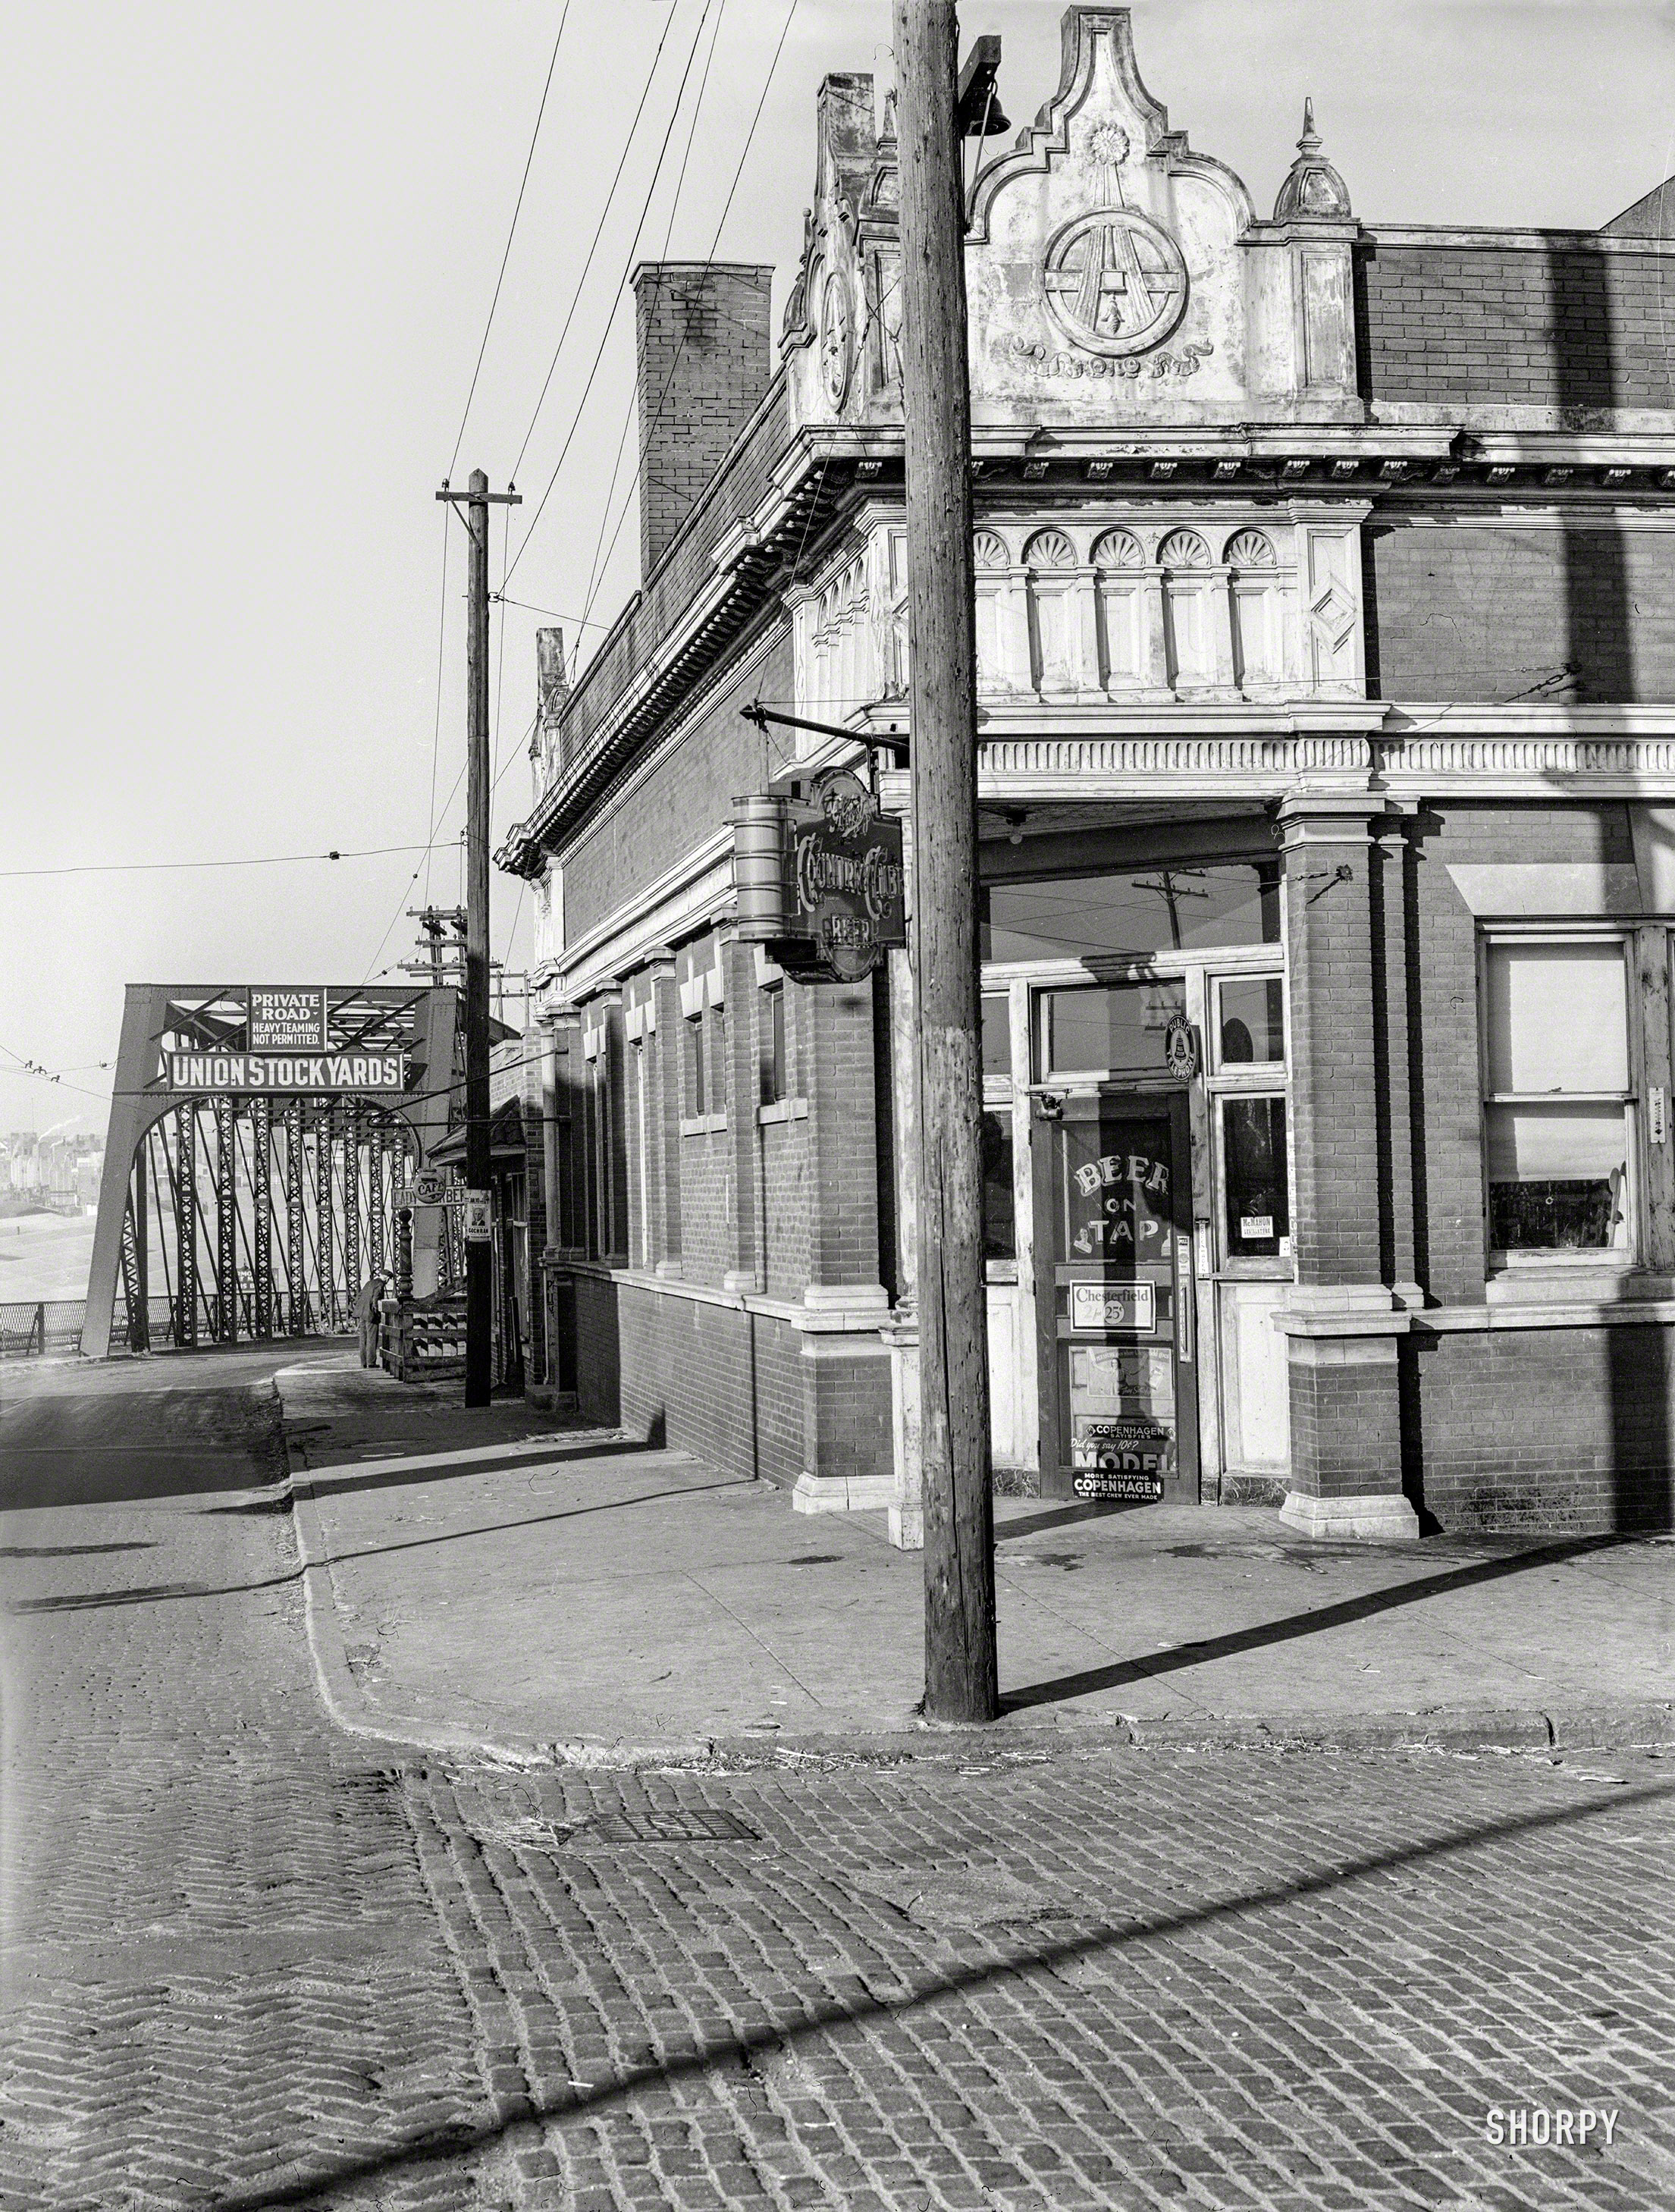 November 1938. "Saloon near entrance to Union Stockyards. South Omaha, Nebraska." Medium format negative by John Vachon. View full size.